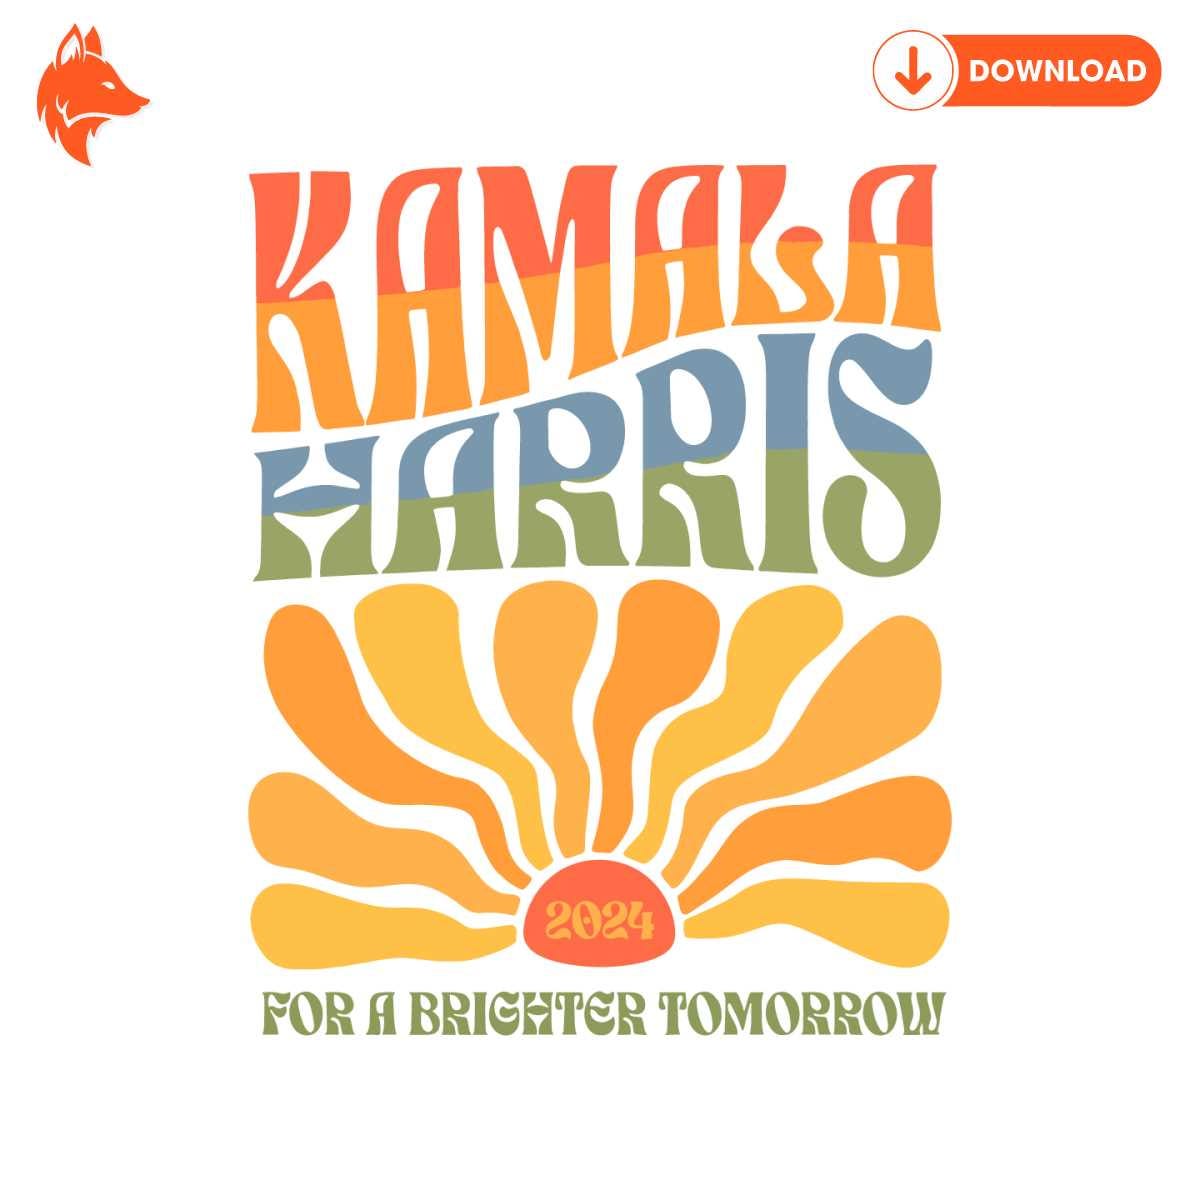 Free Kamala Harris For A Brighter Tomorrow 2024 SVG